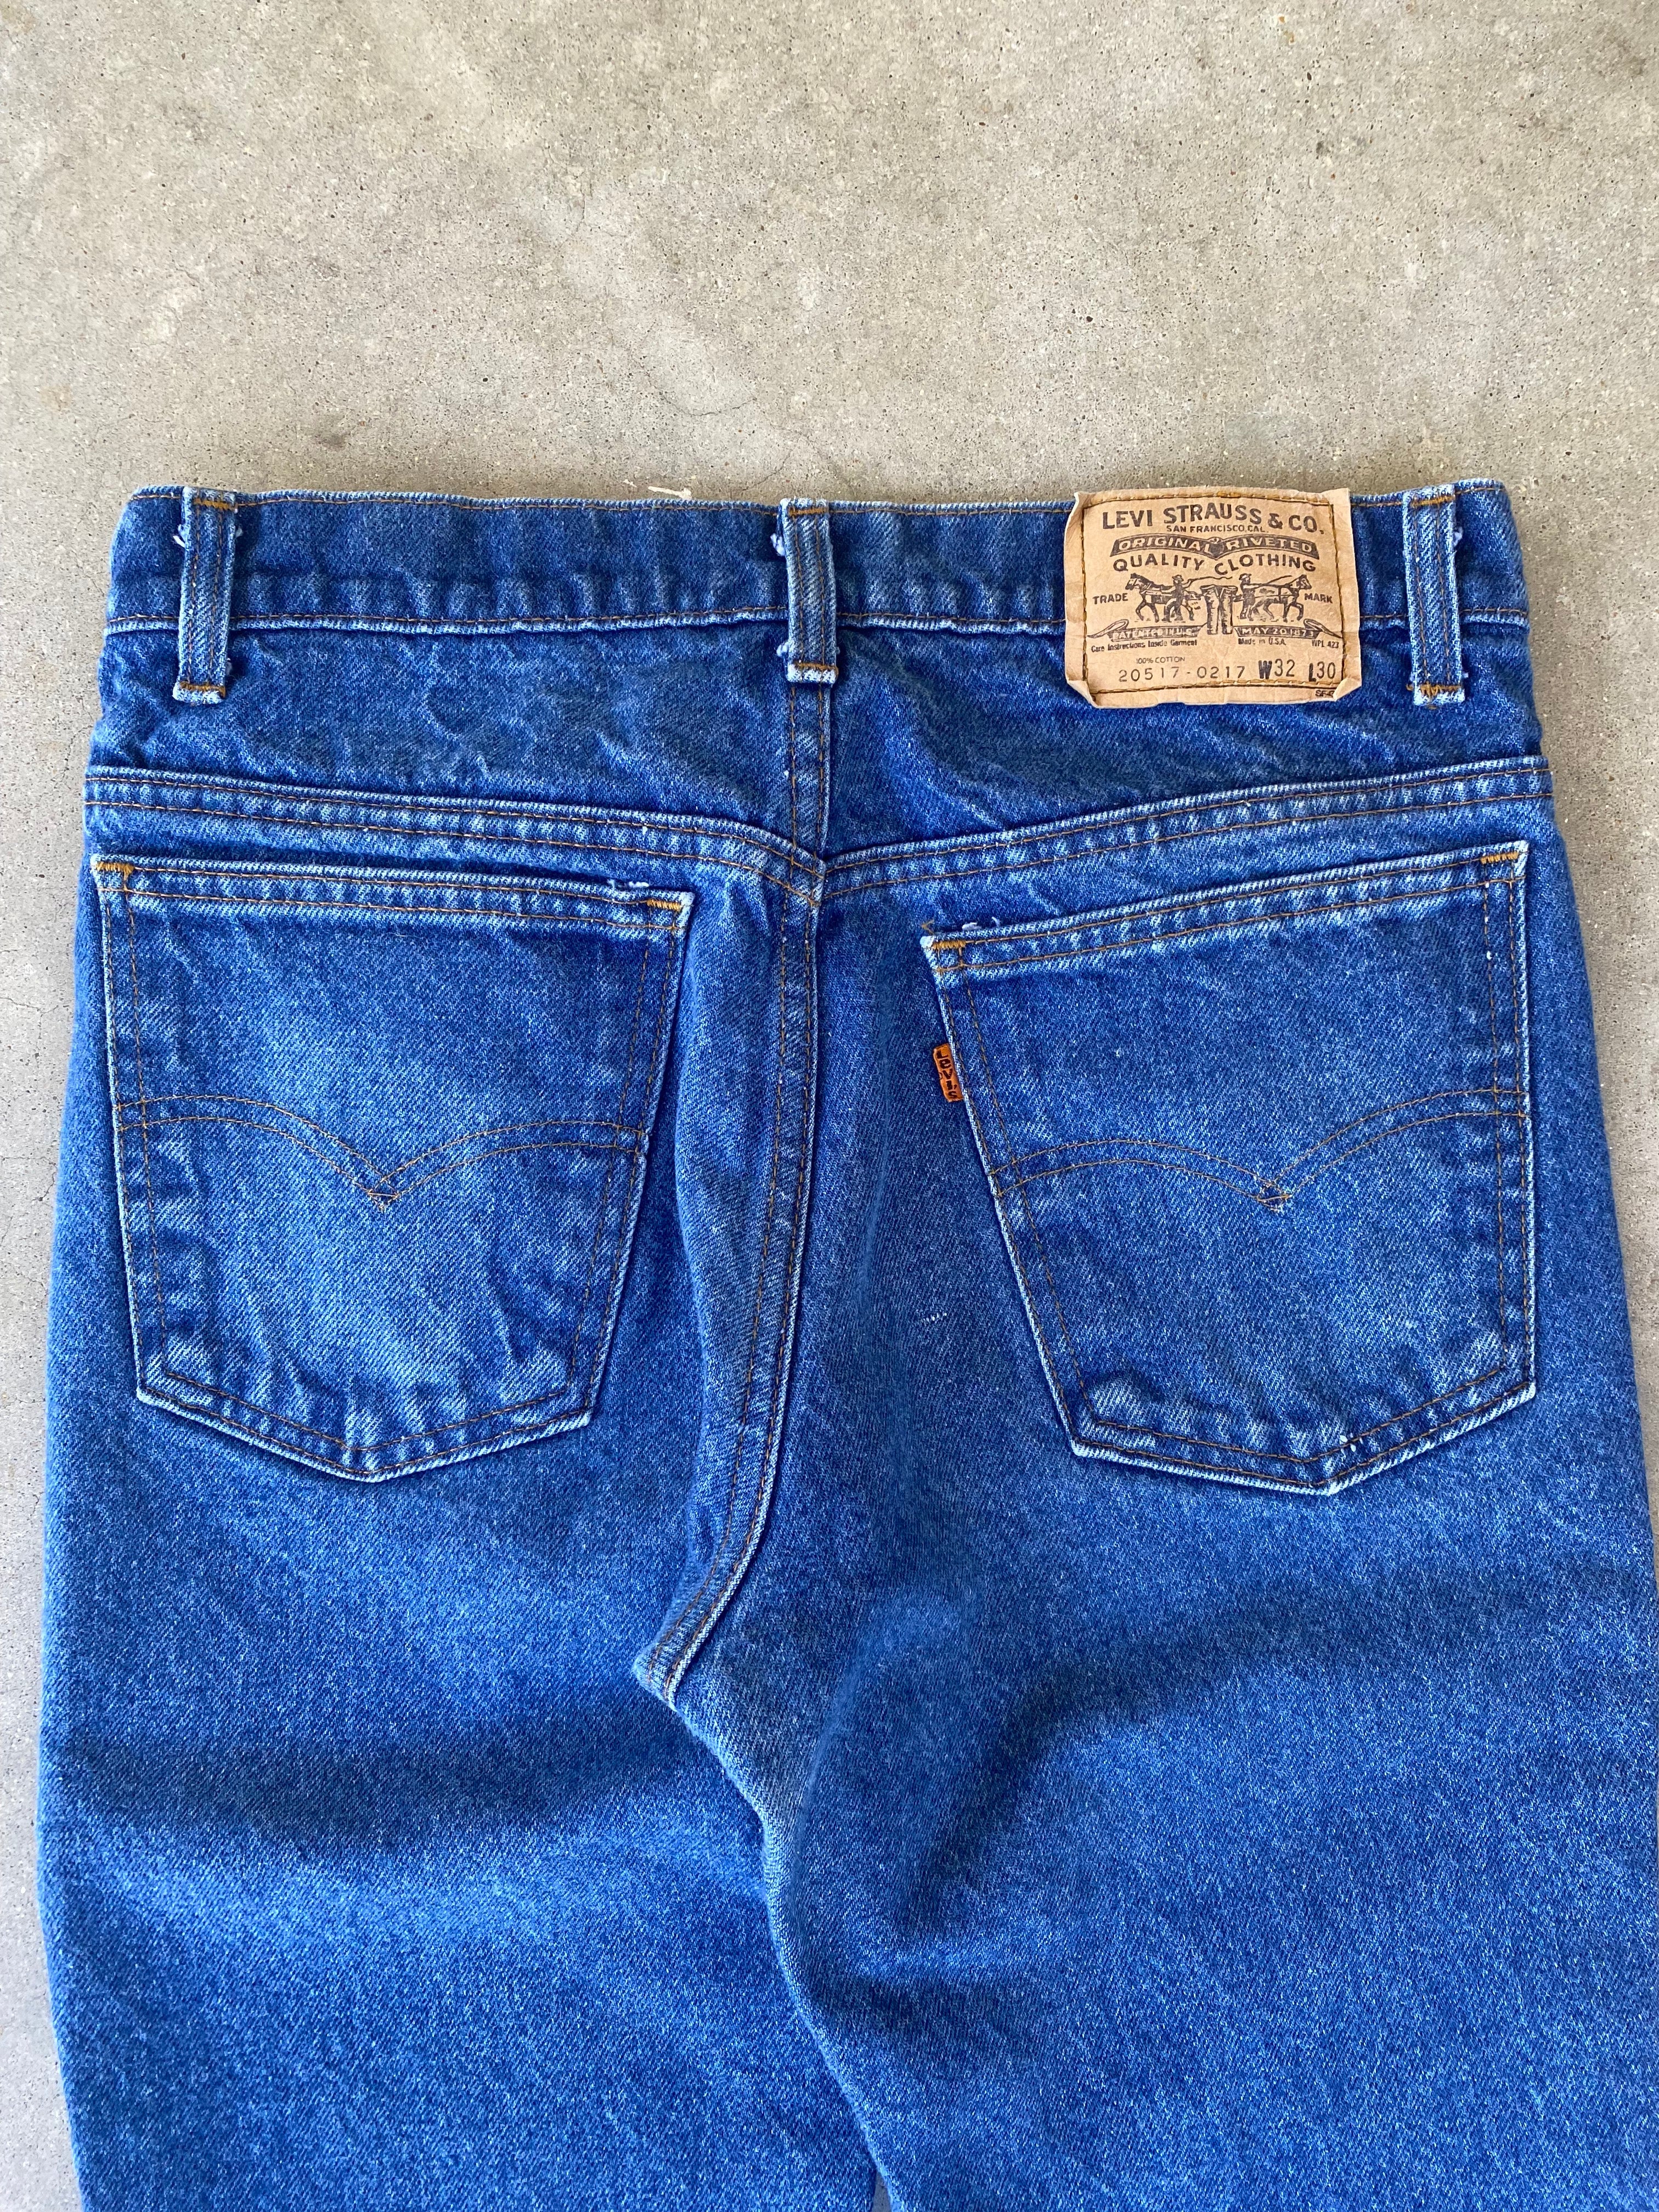 1980s Levi's 517 Orange Tab Boocut Flare Jeans (31"x29")